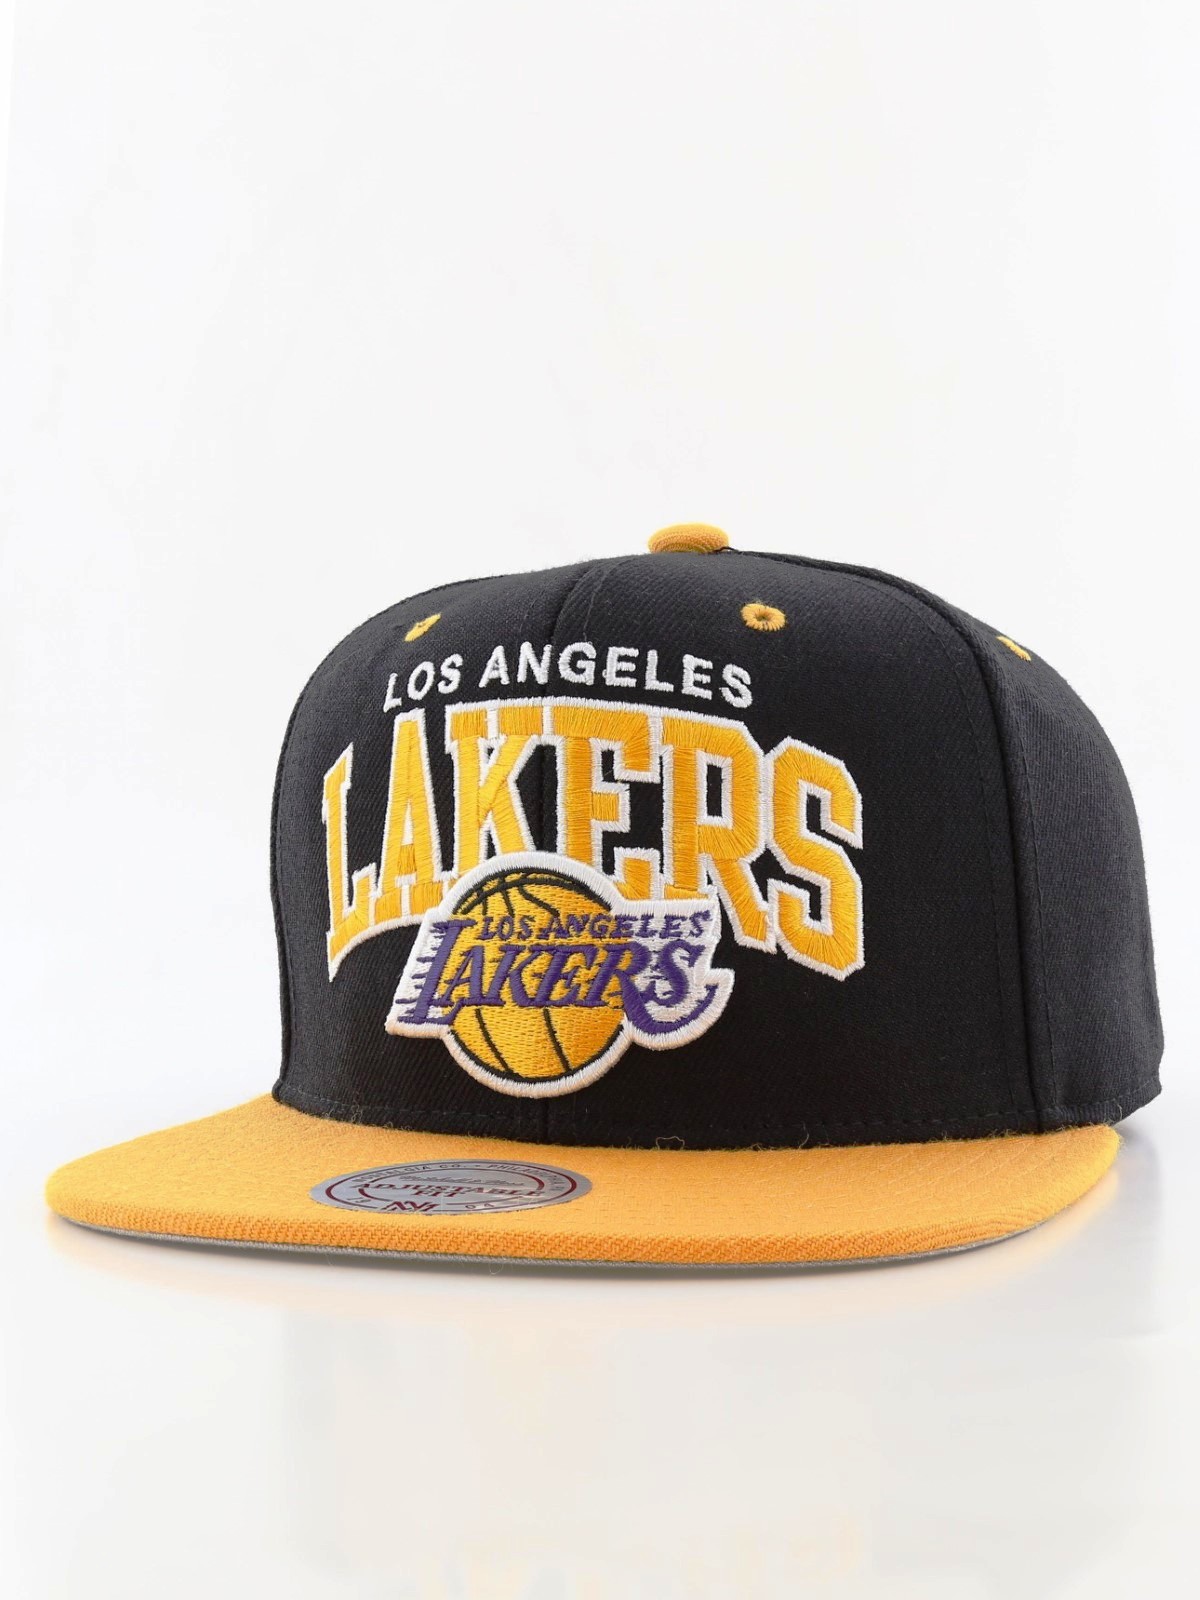 Mitchel & Ness La Lakers Team Arch Snapback Men's Cap Black/Yellow